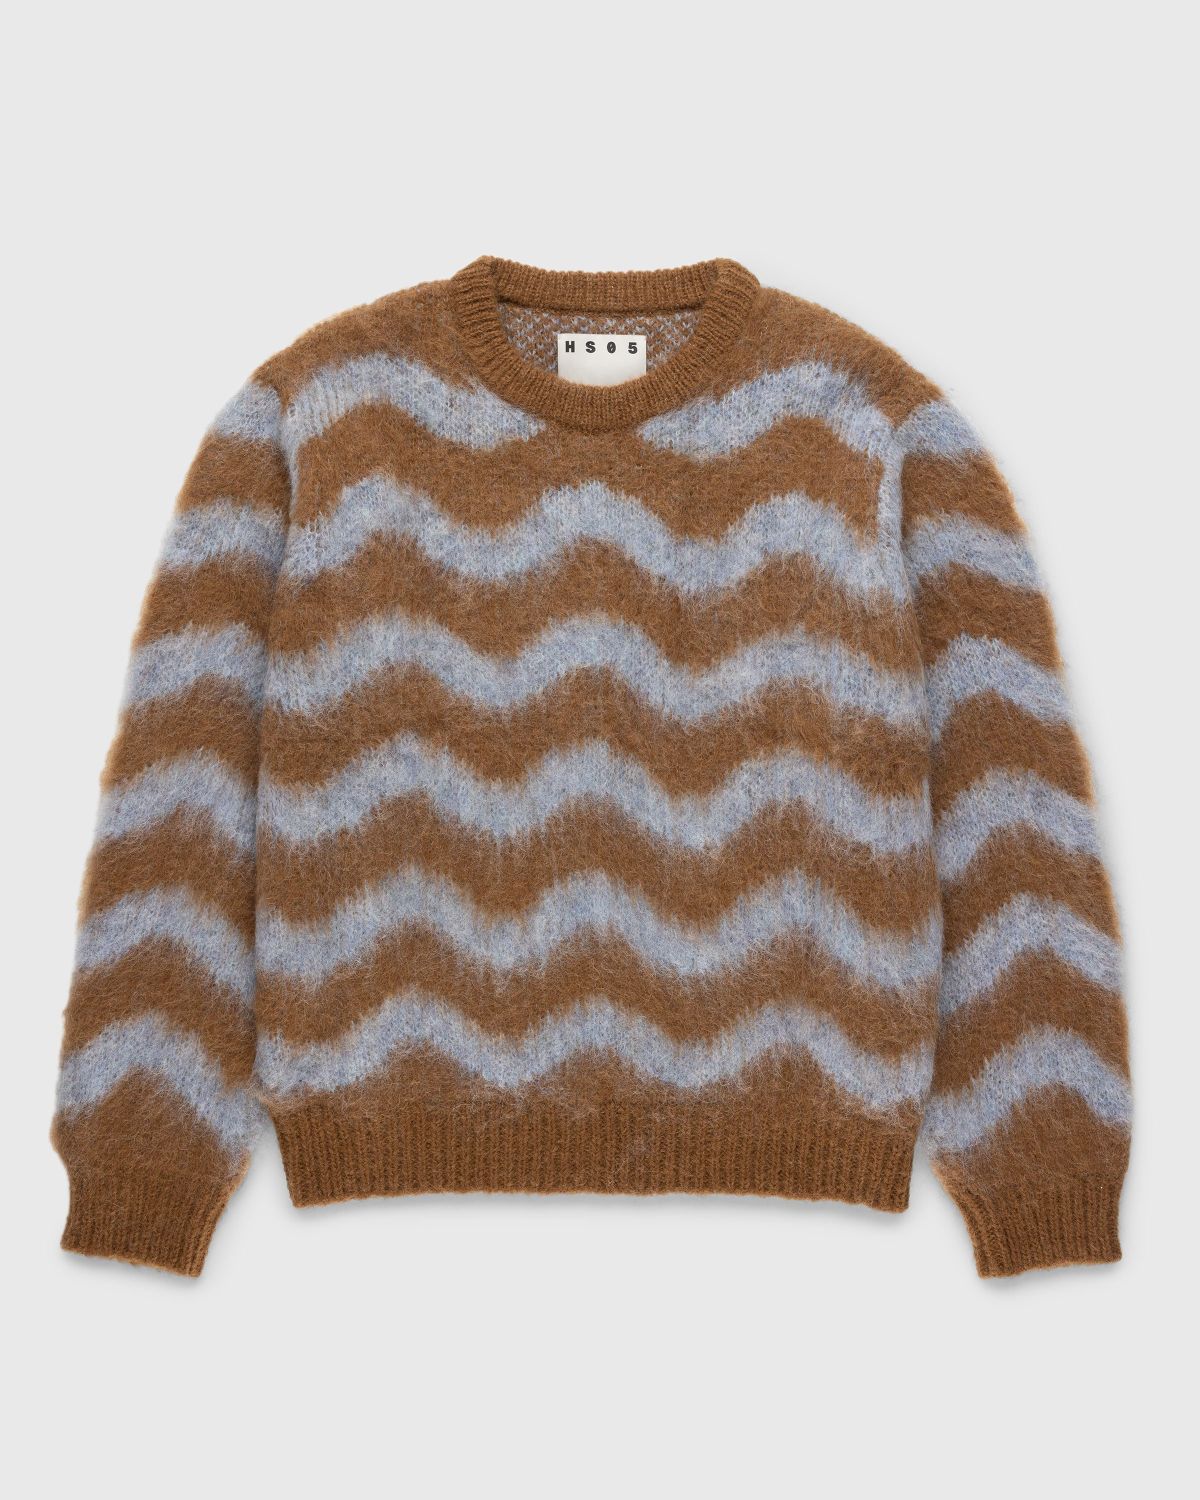 Highsnobiety HS05 – Alpaca Fuzzy Wave Sweater Light Blue/Brown - Knitwear - Multi - Image 1